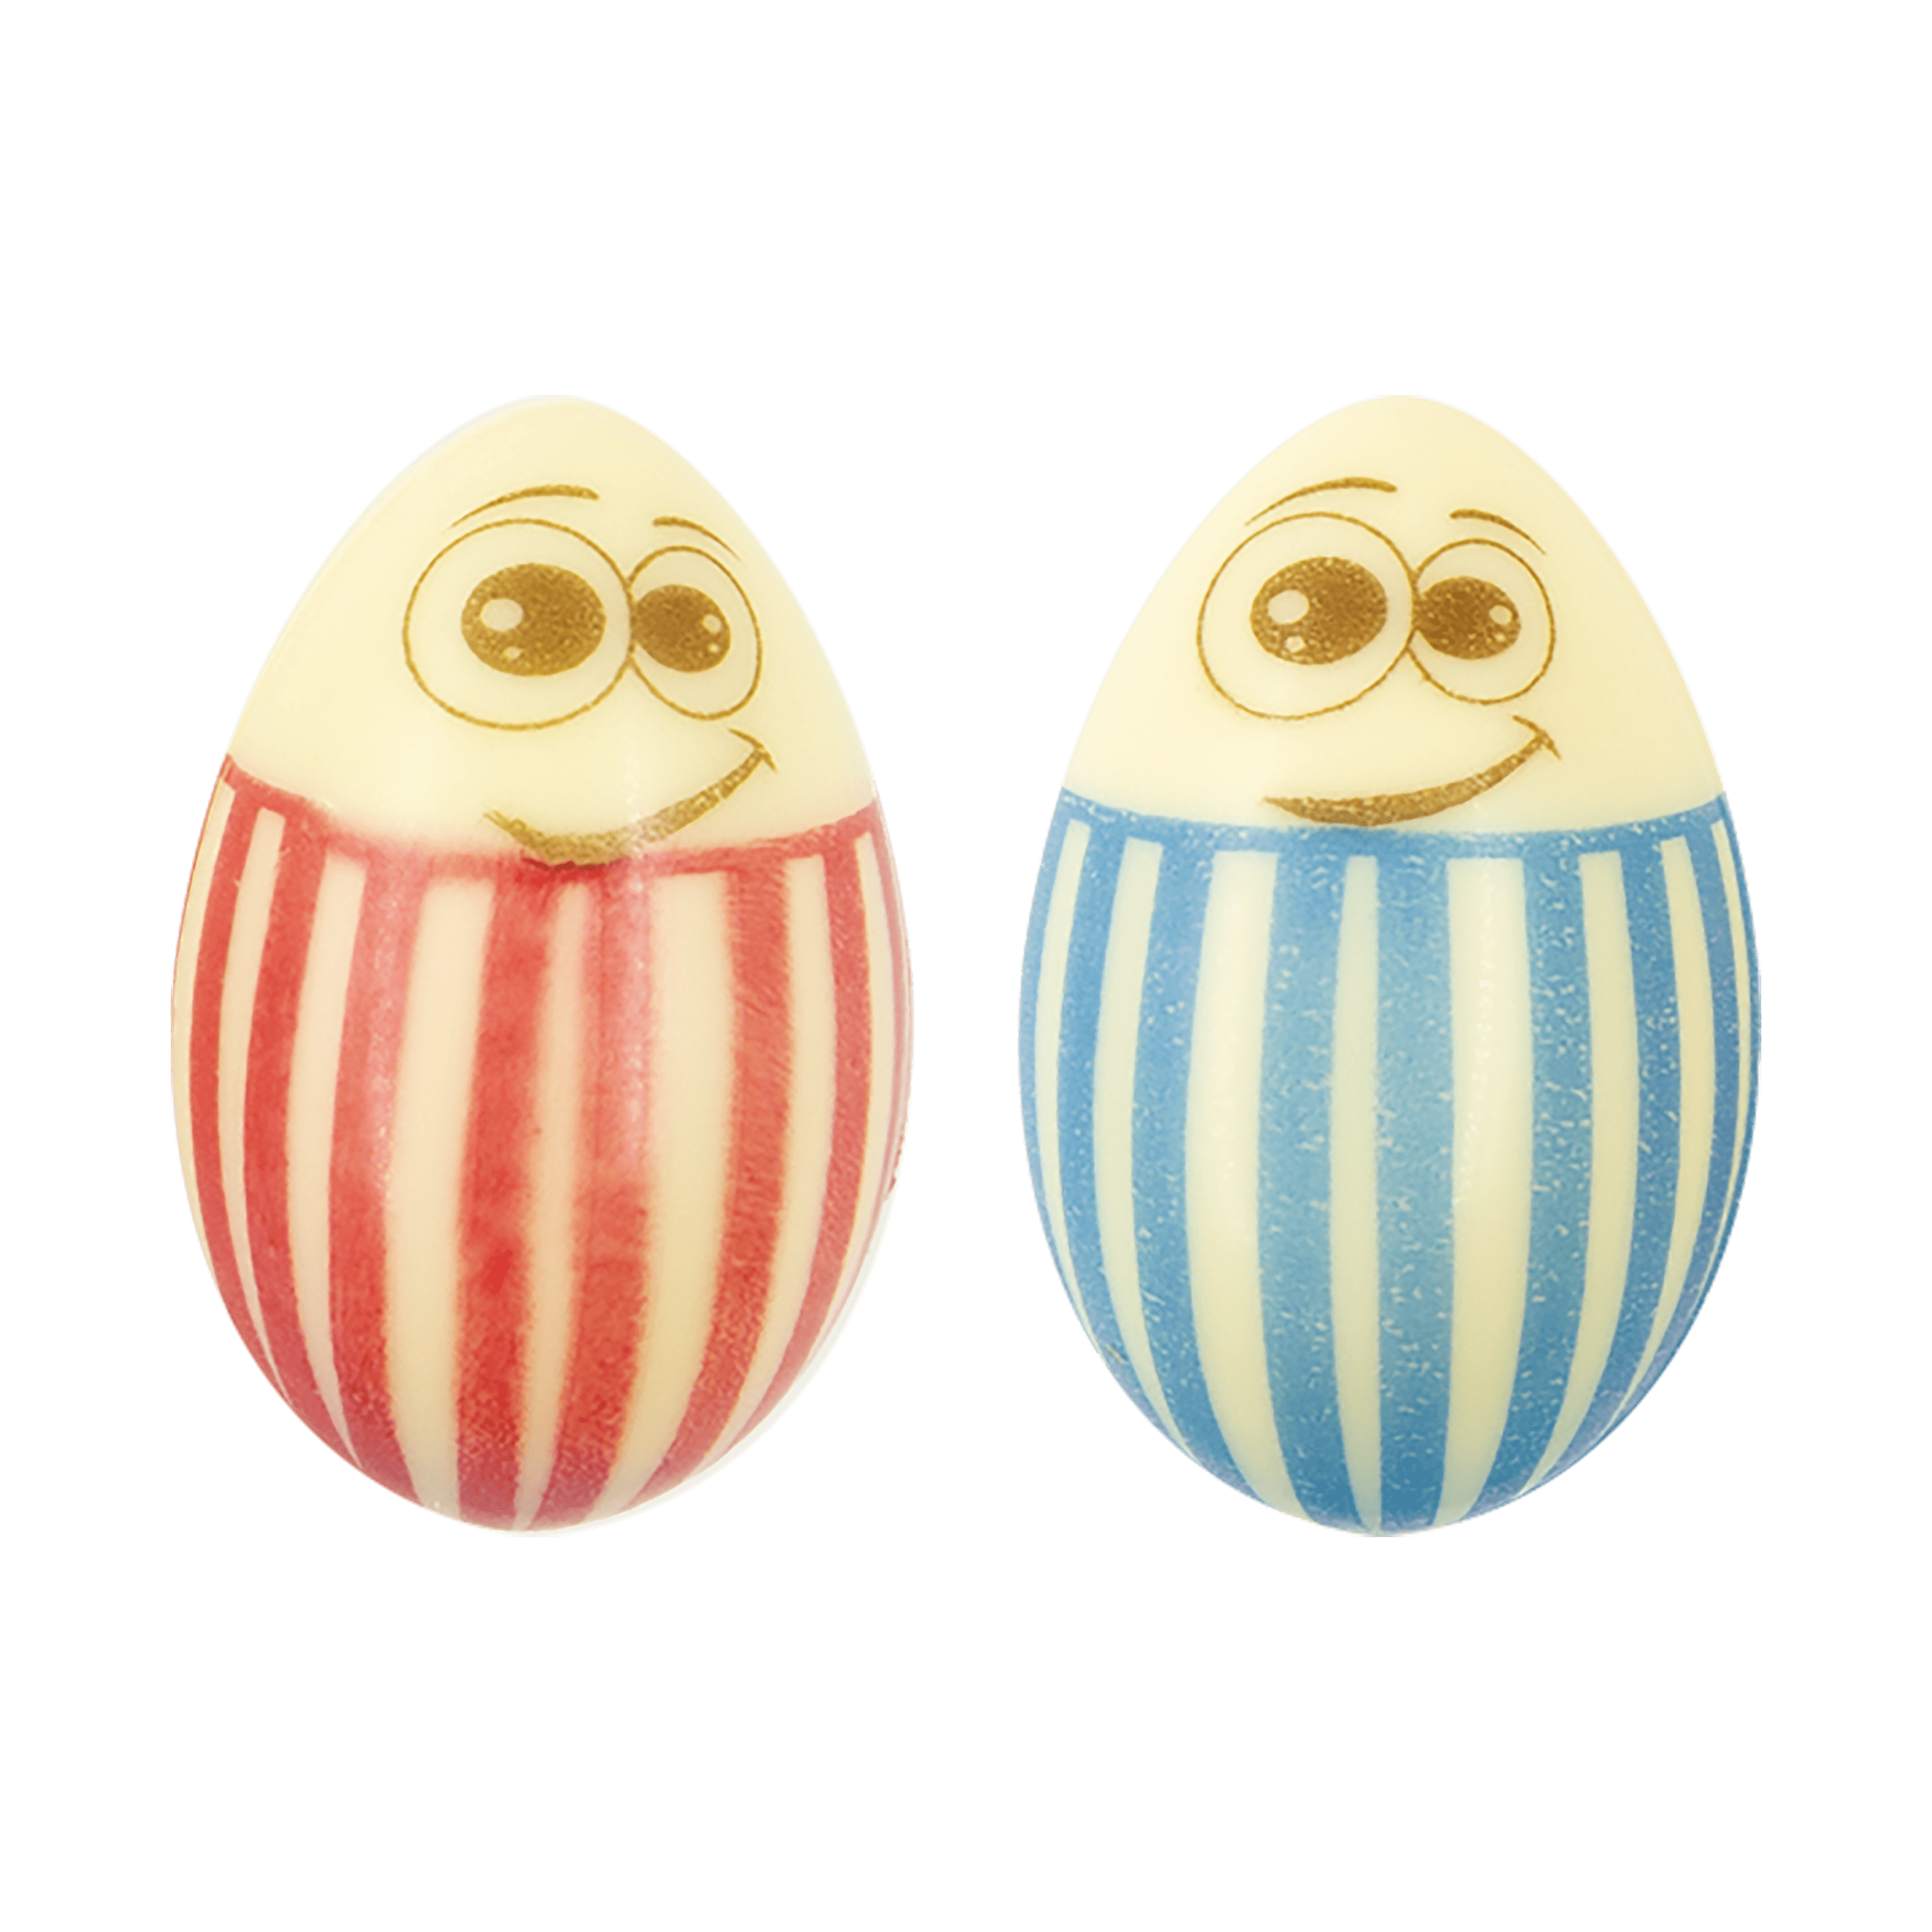 Easter Smile Eggs - 2 models - Savory Gourmet